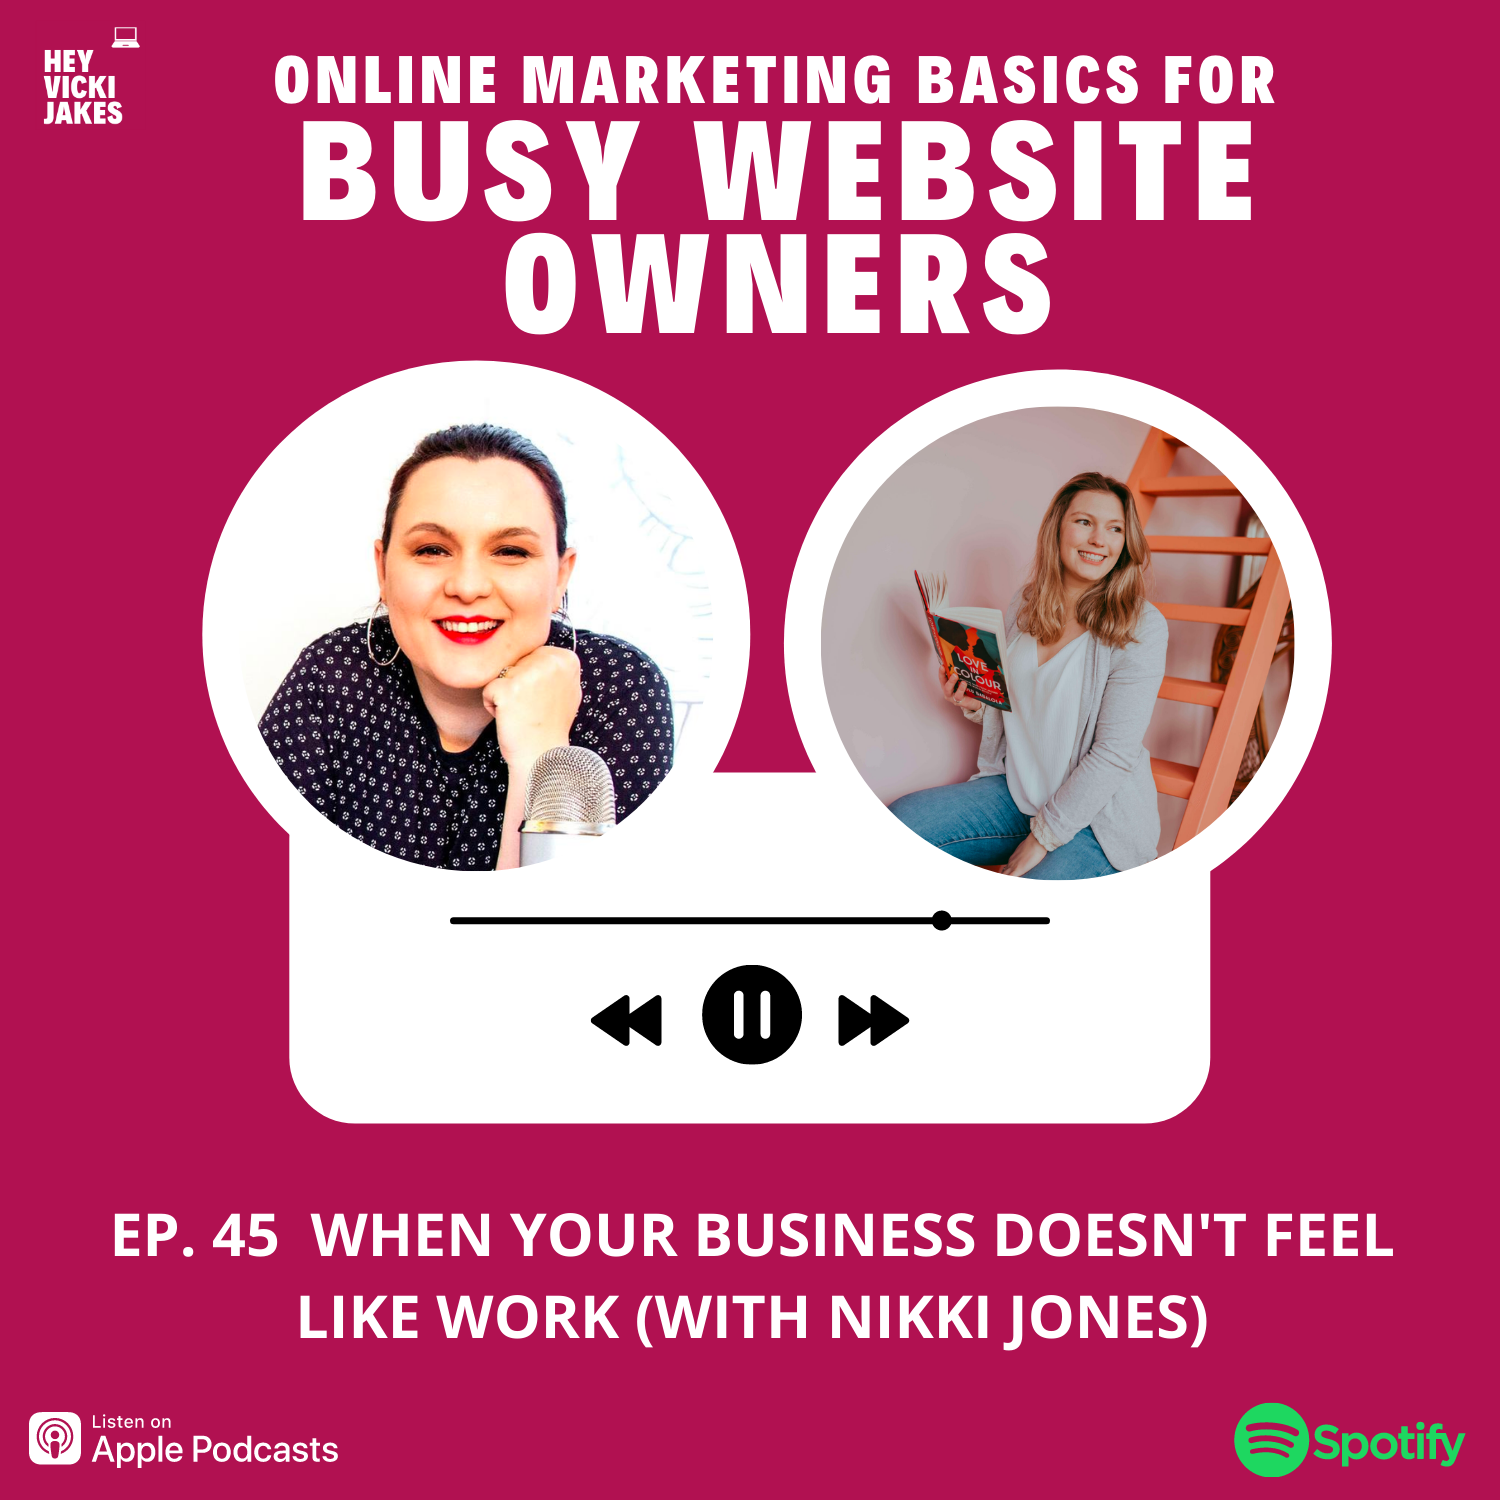 Artwork for podcast Online Marketing Basics for Busy Website Owners